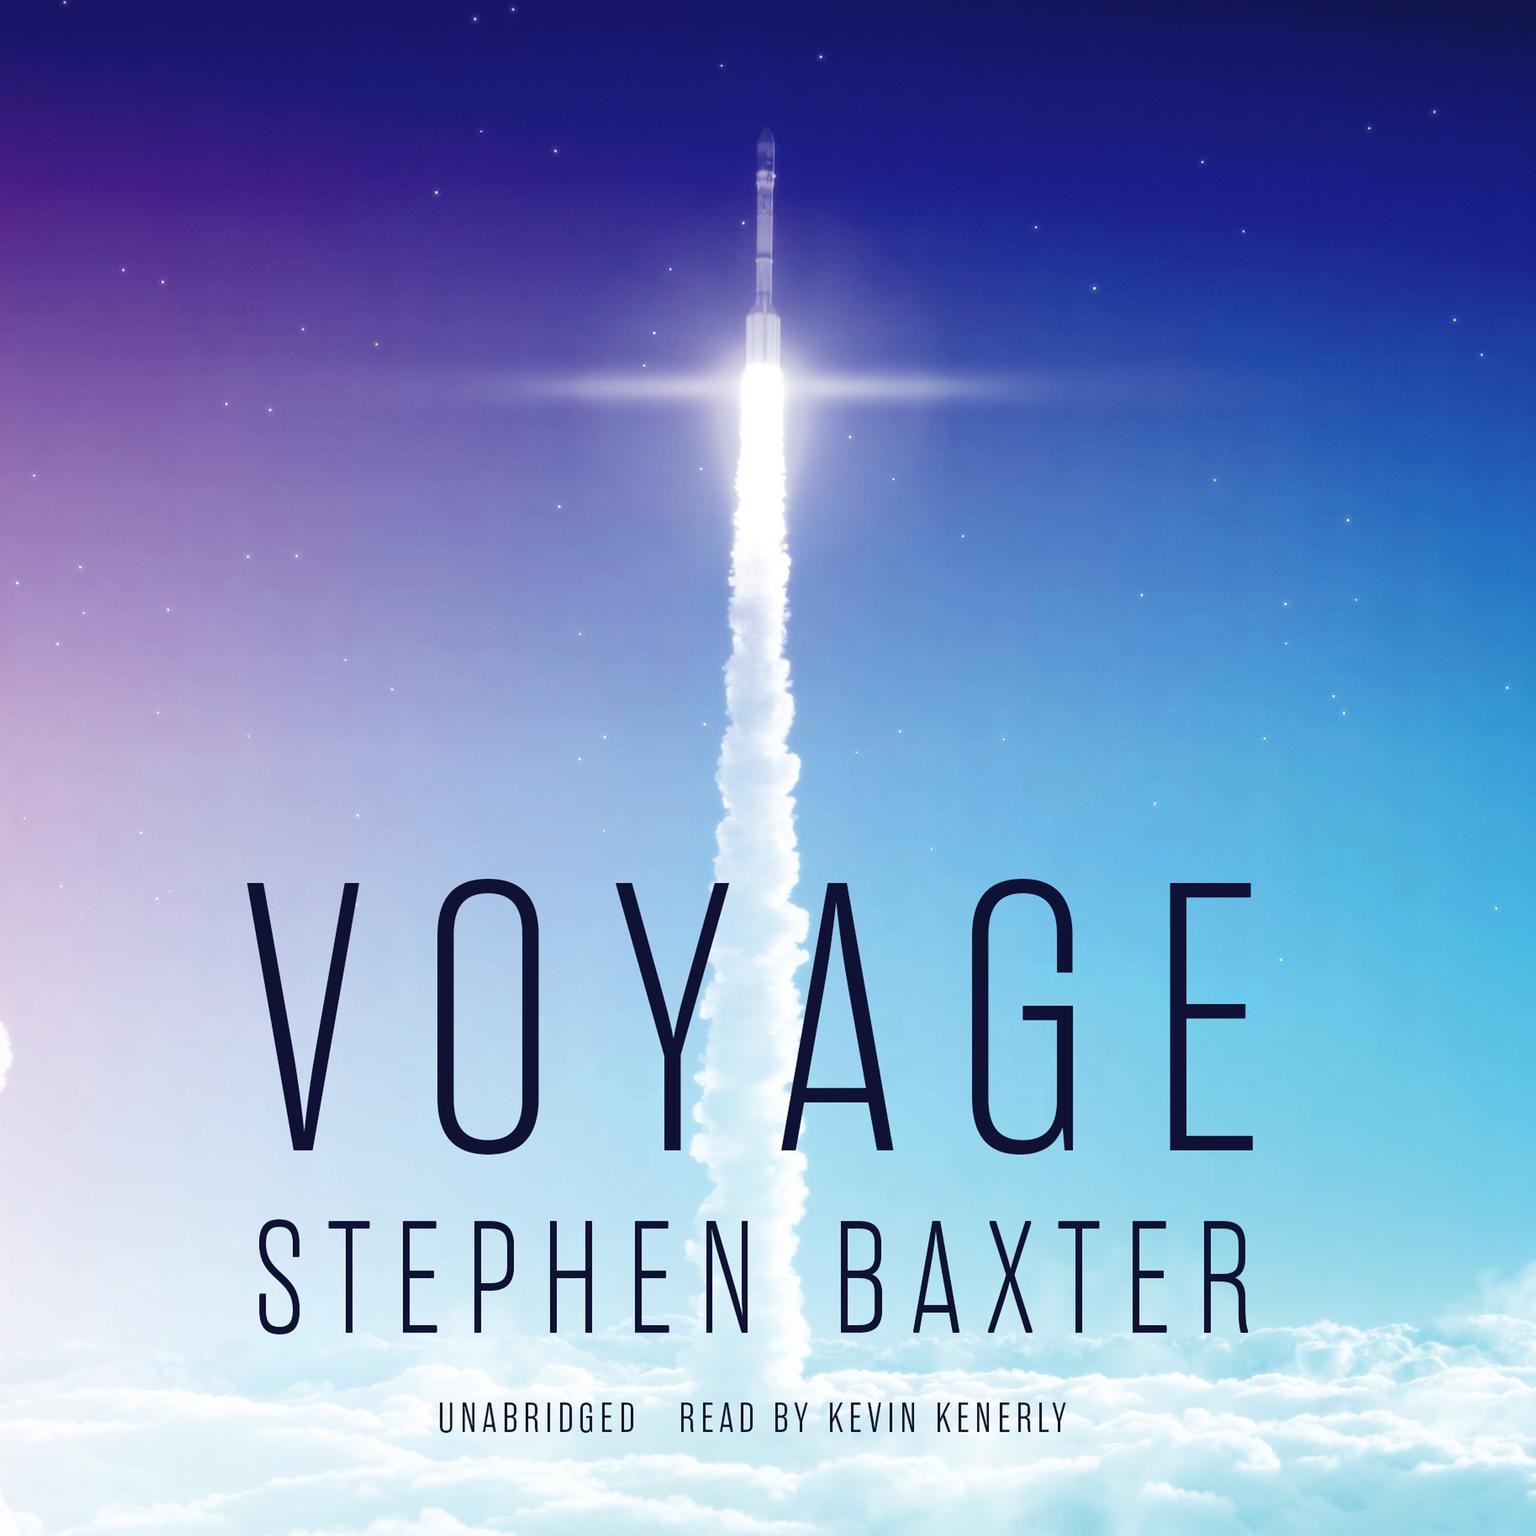 Voyage Audiobook, by Stephen Baxter